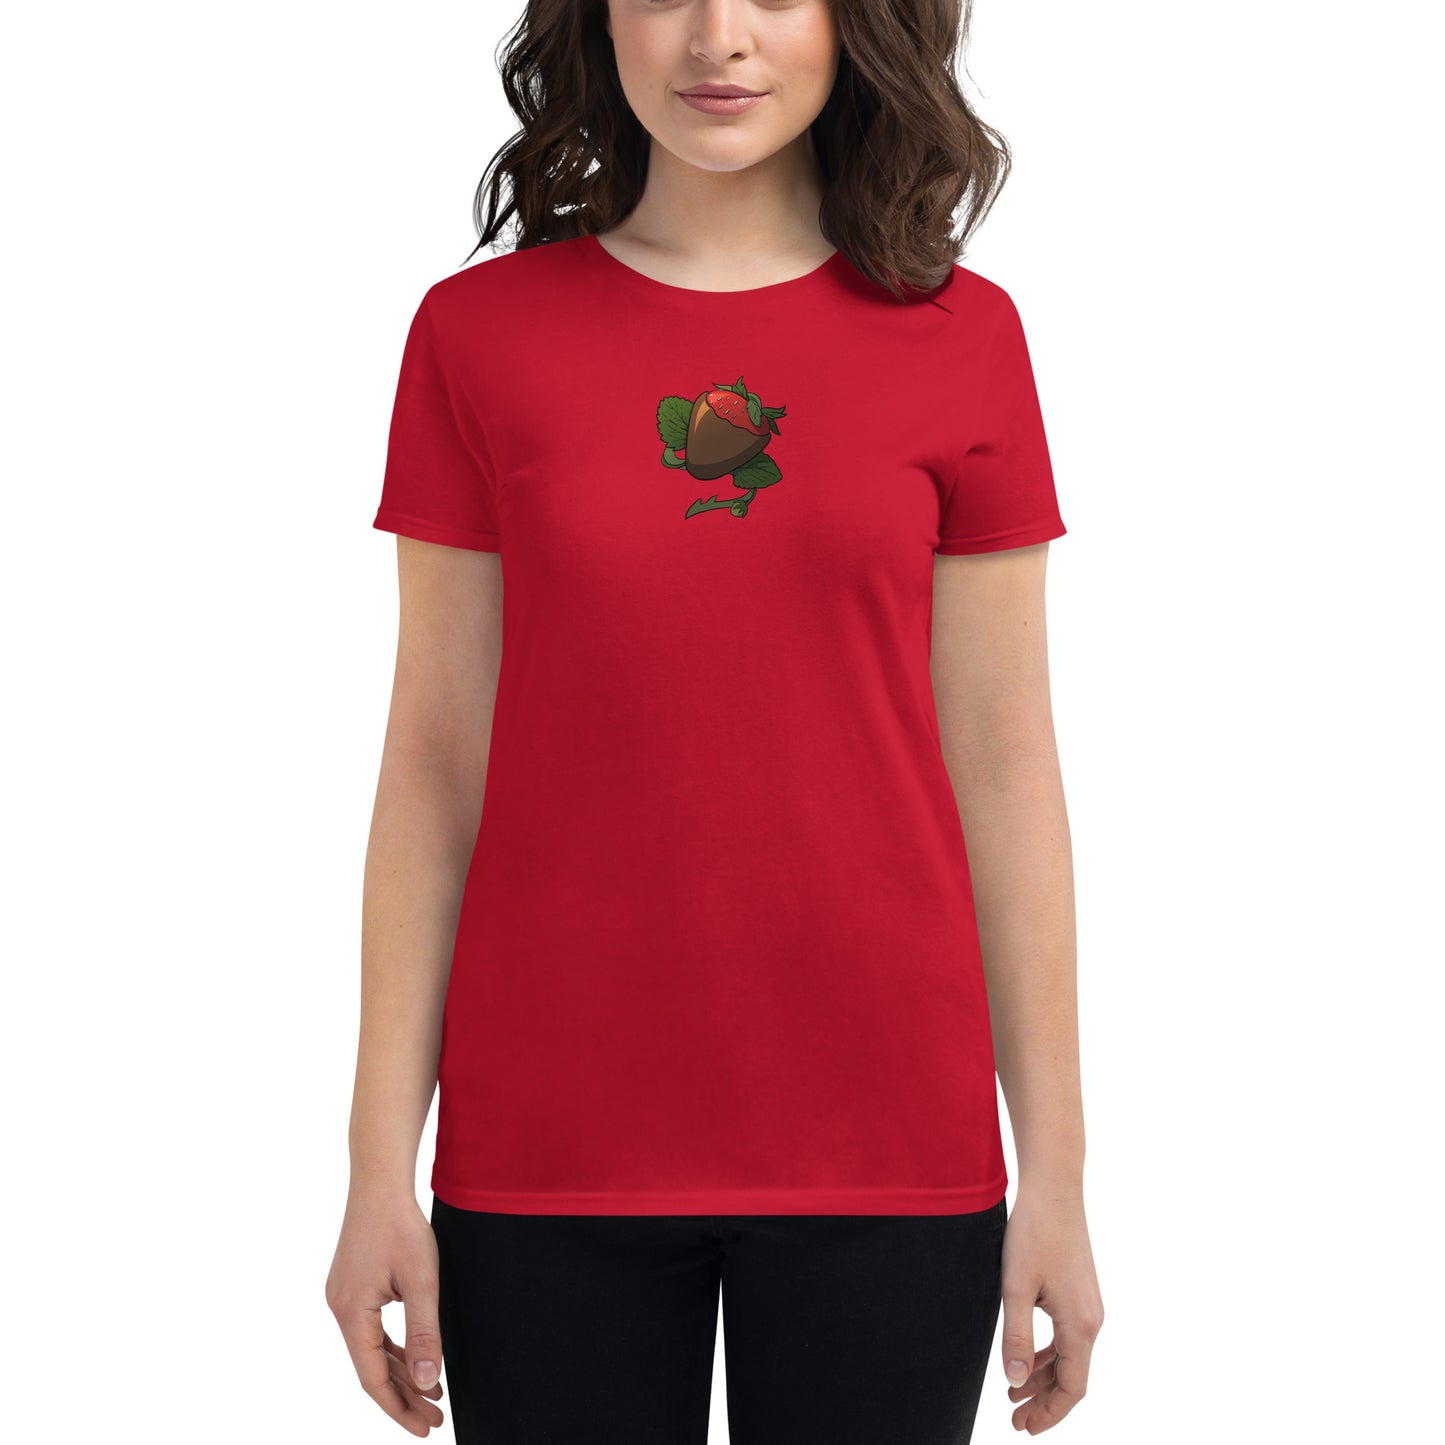 "Mini Demon Strawberry" Women's T-shirt (The Guild Codex)